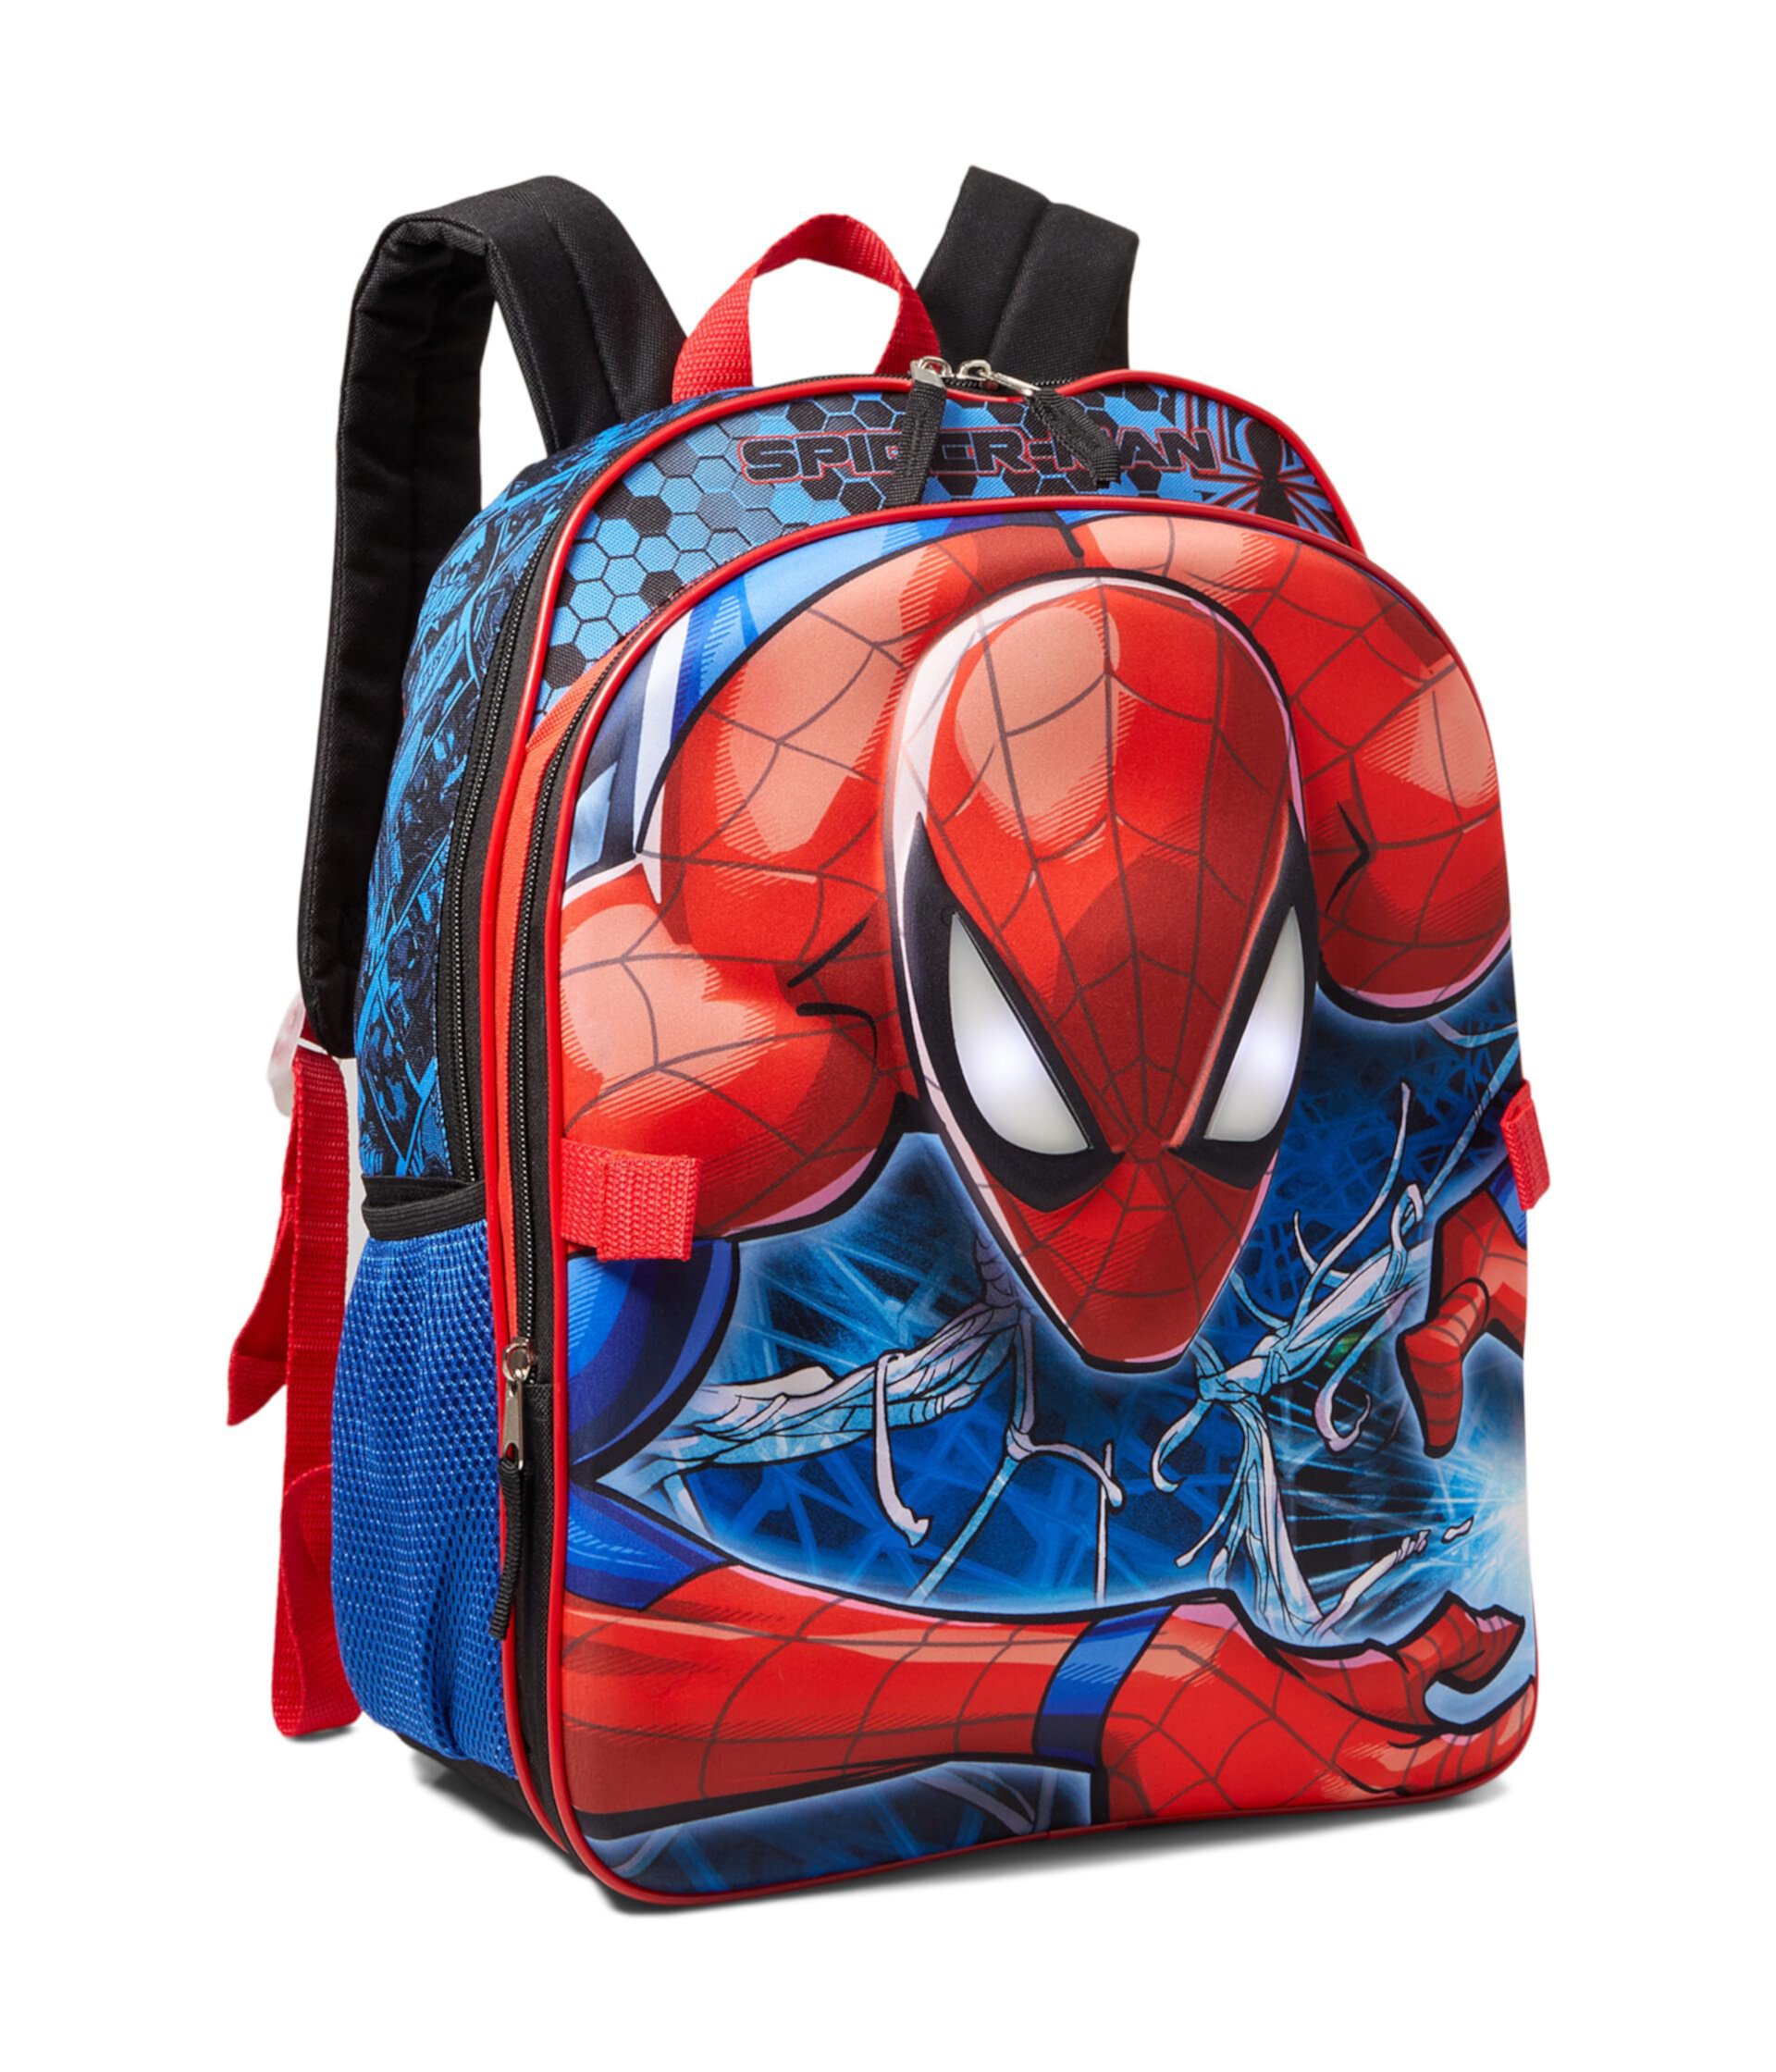 Spider-Man Backpack Set (Little Kid/Big Kid) BIOWORLD Kids